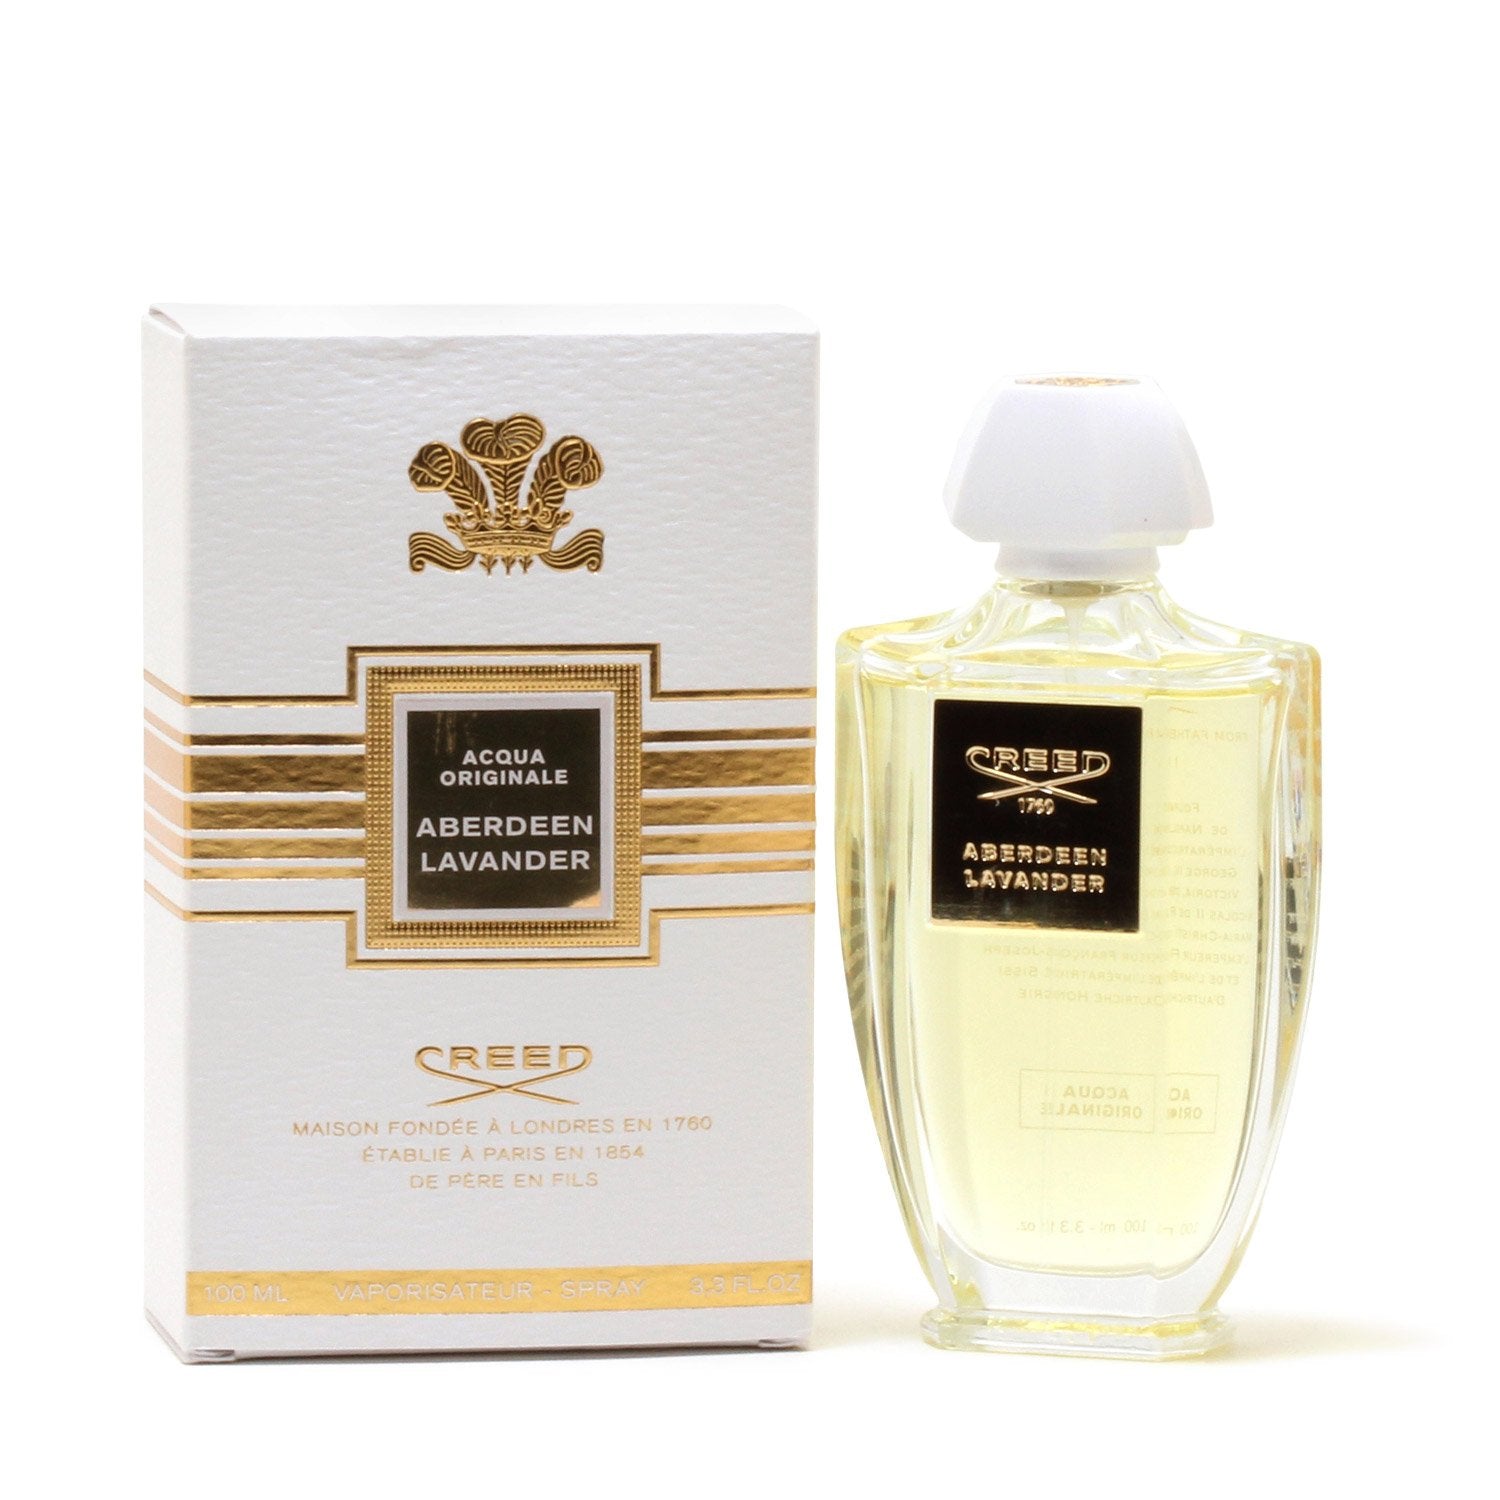 Perfume - CREED ACQUA ORIGINALE ABERDEEN LAVENDER UNISEX - EAU DE PARFUM SPRAY, 3.4 OZ